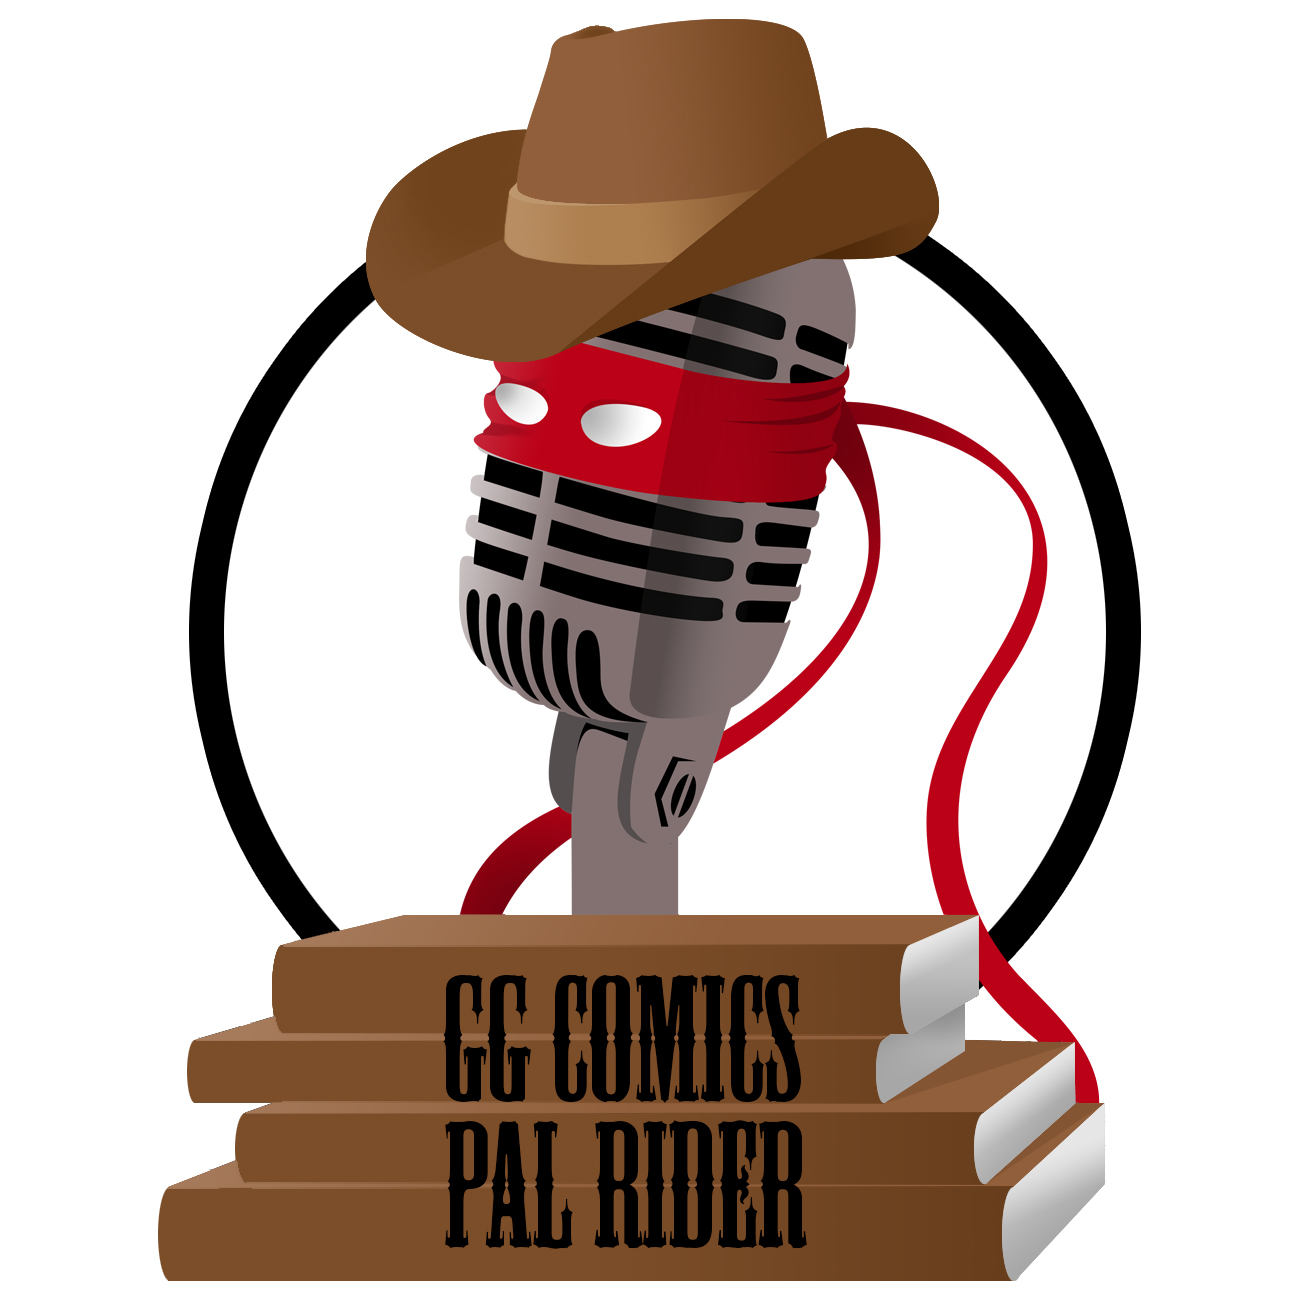 Les GG comics - PAL Rider 08 avec Lord-Of-Babylon